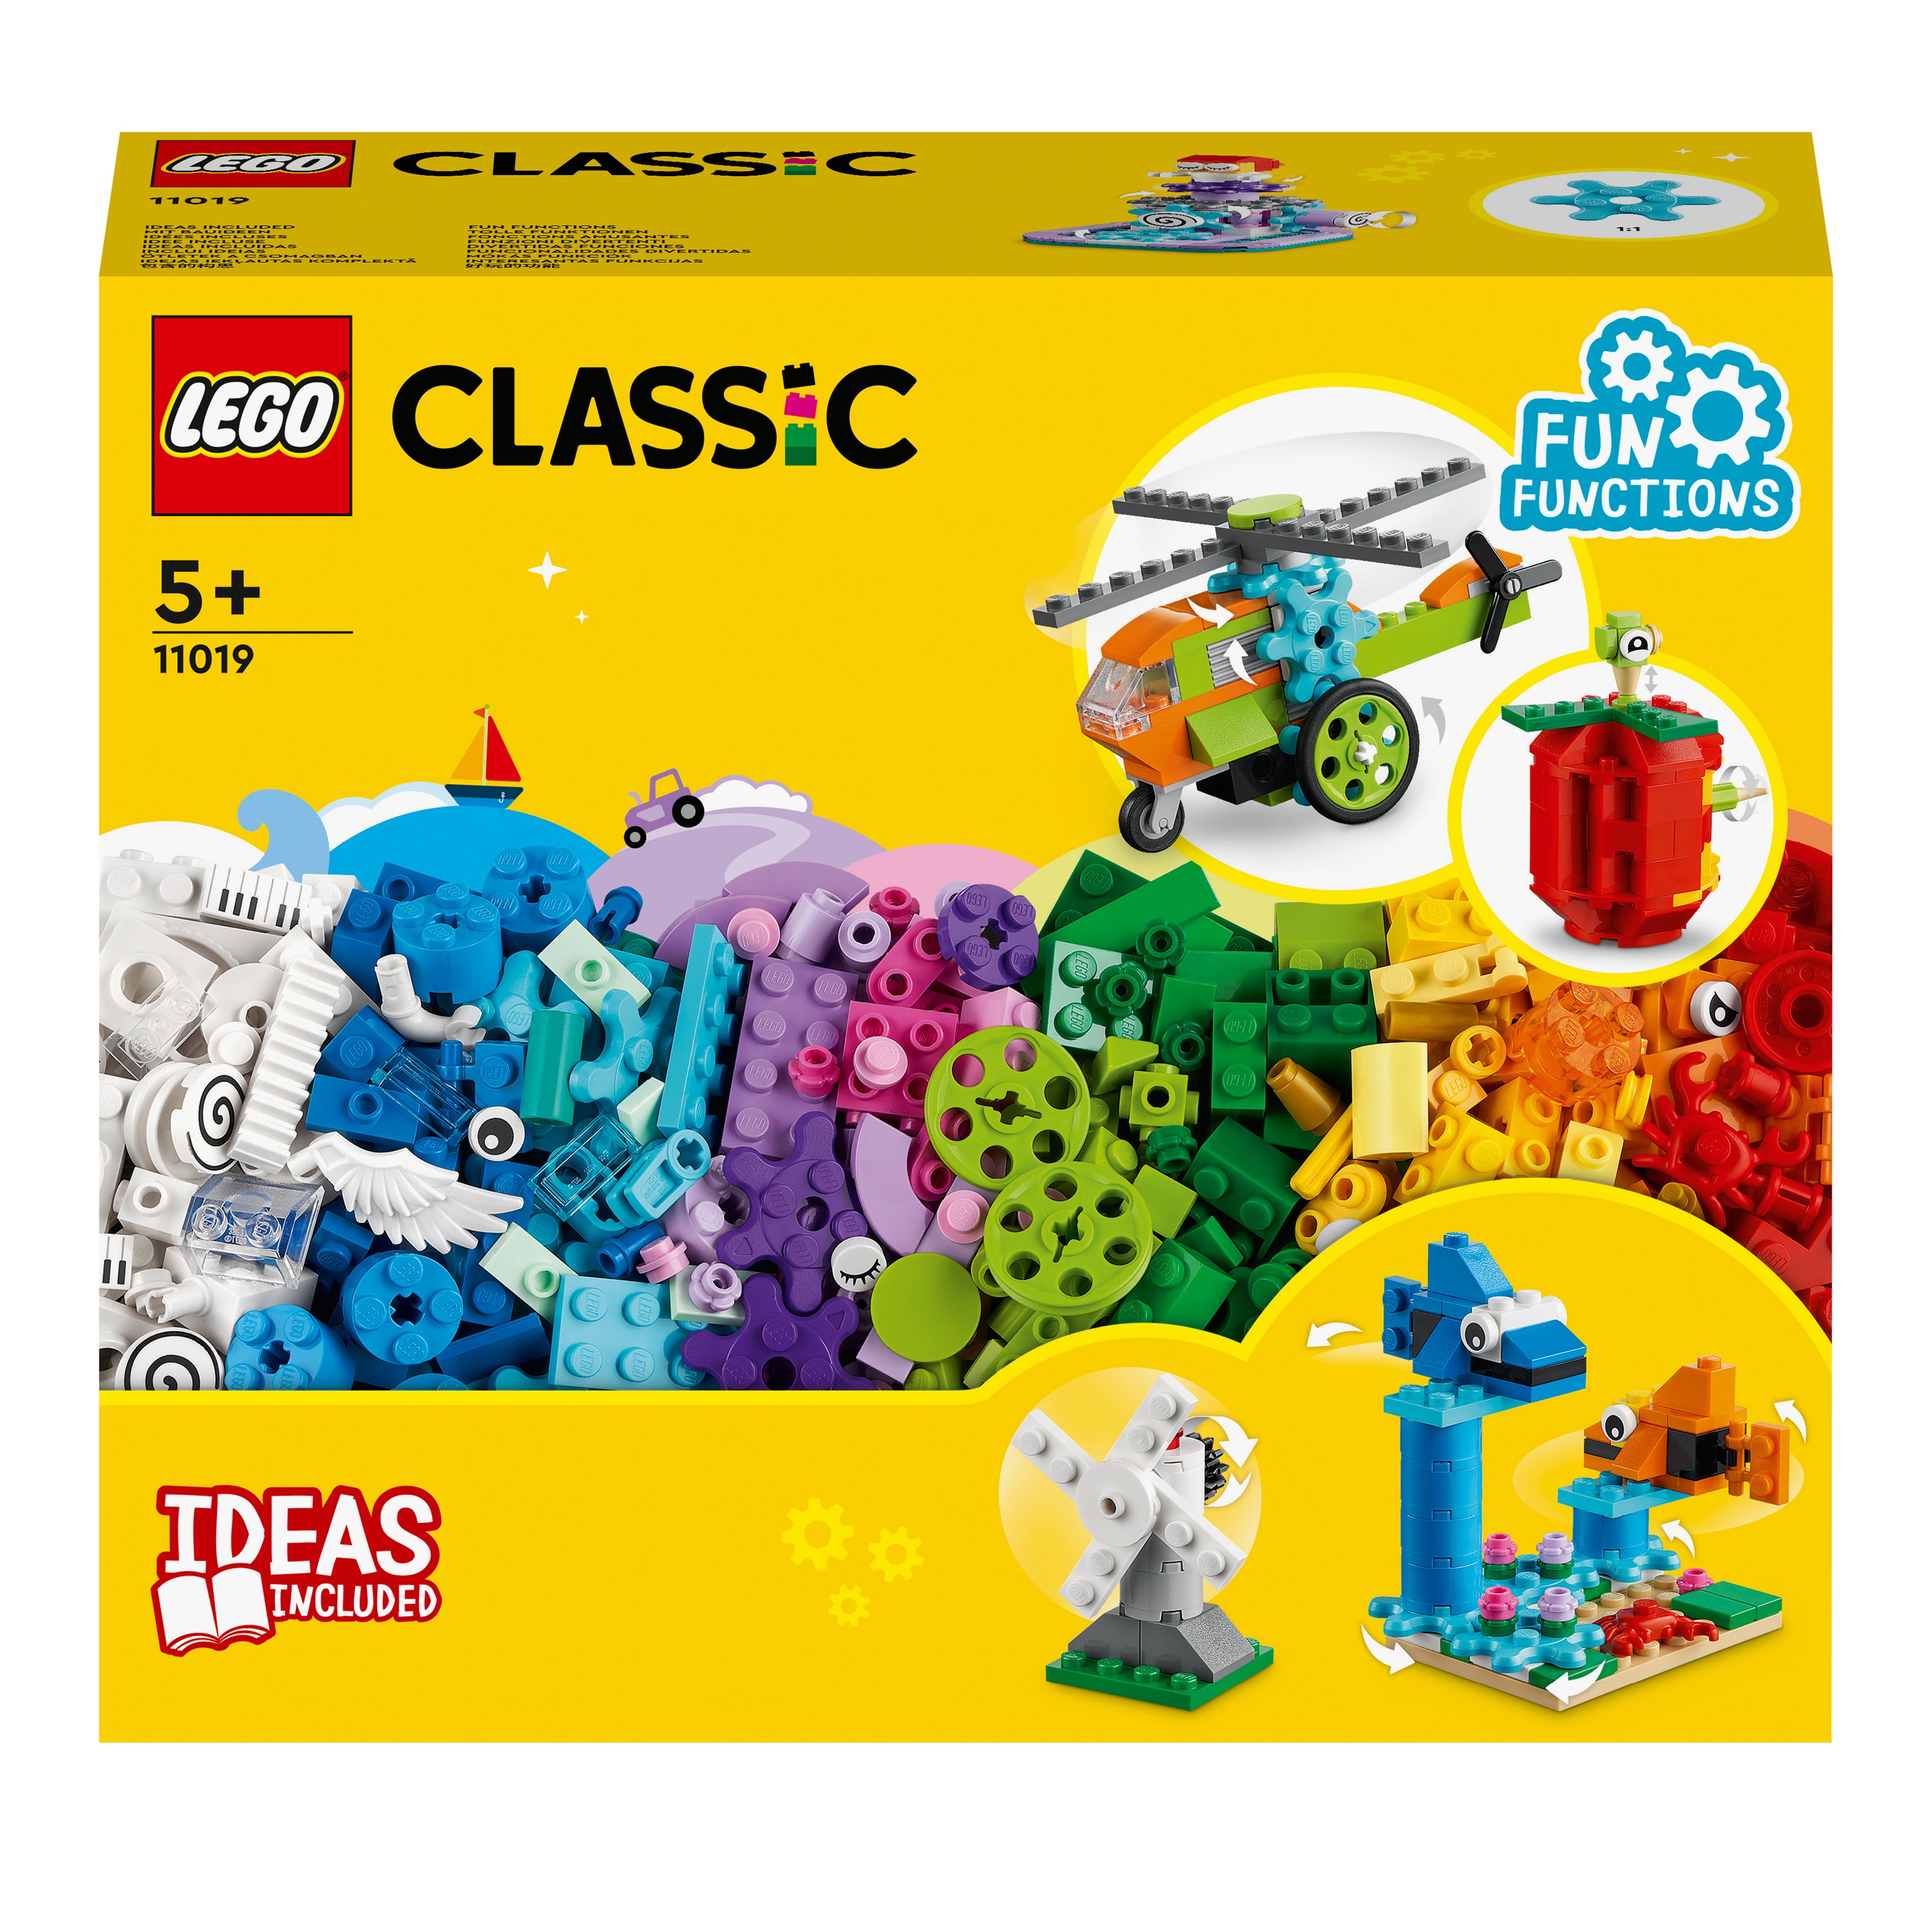 LEGO CLASSIC 4+ ITEM 11011 SET INCLUDES 1500 PIECES BRICKS AND